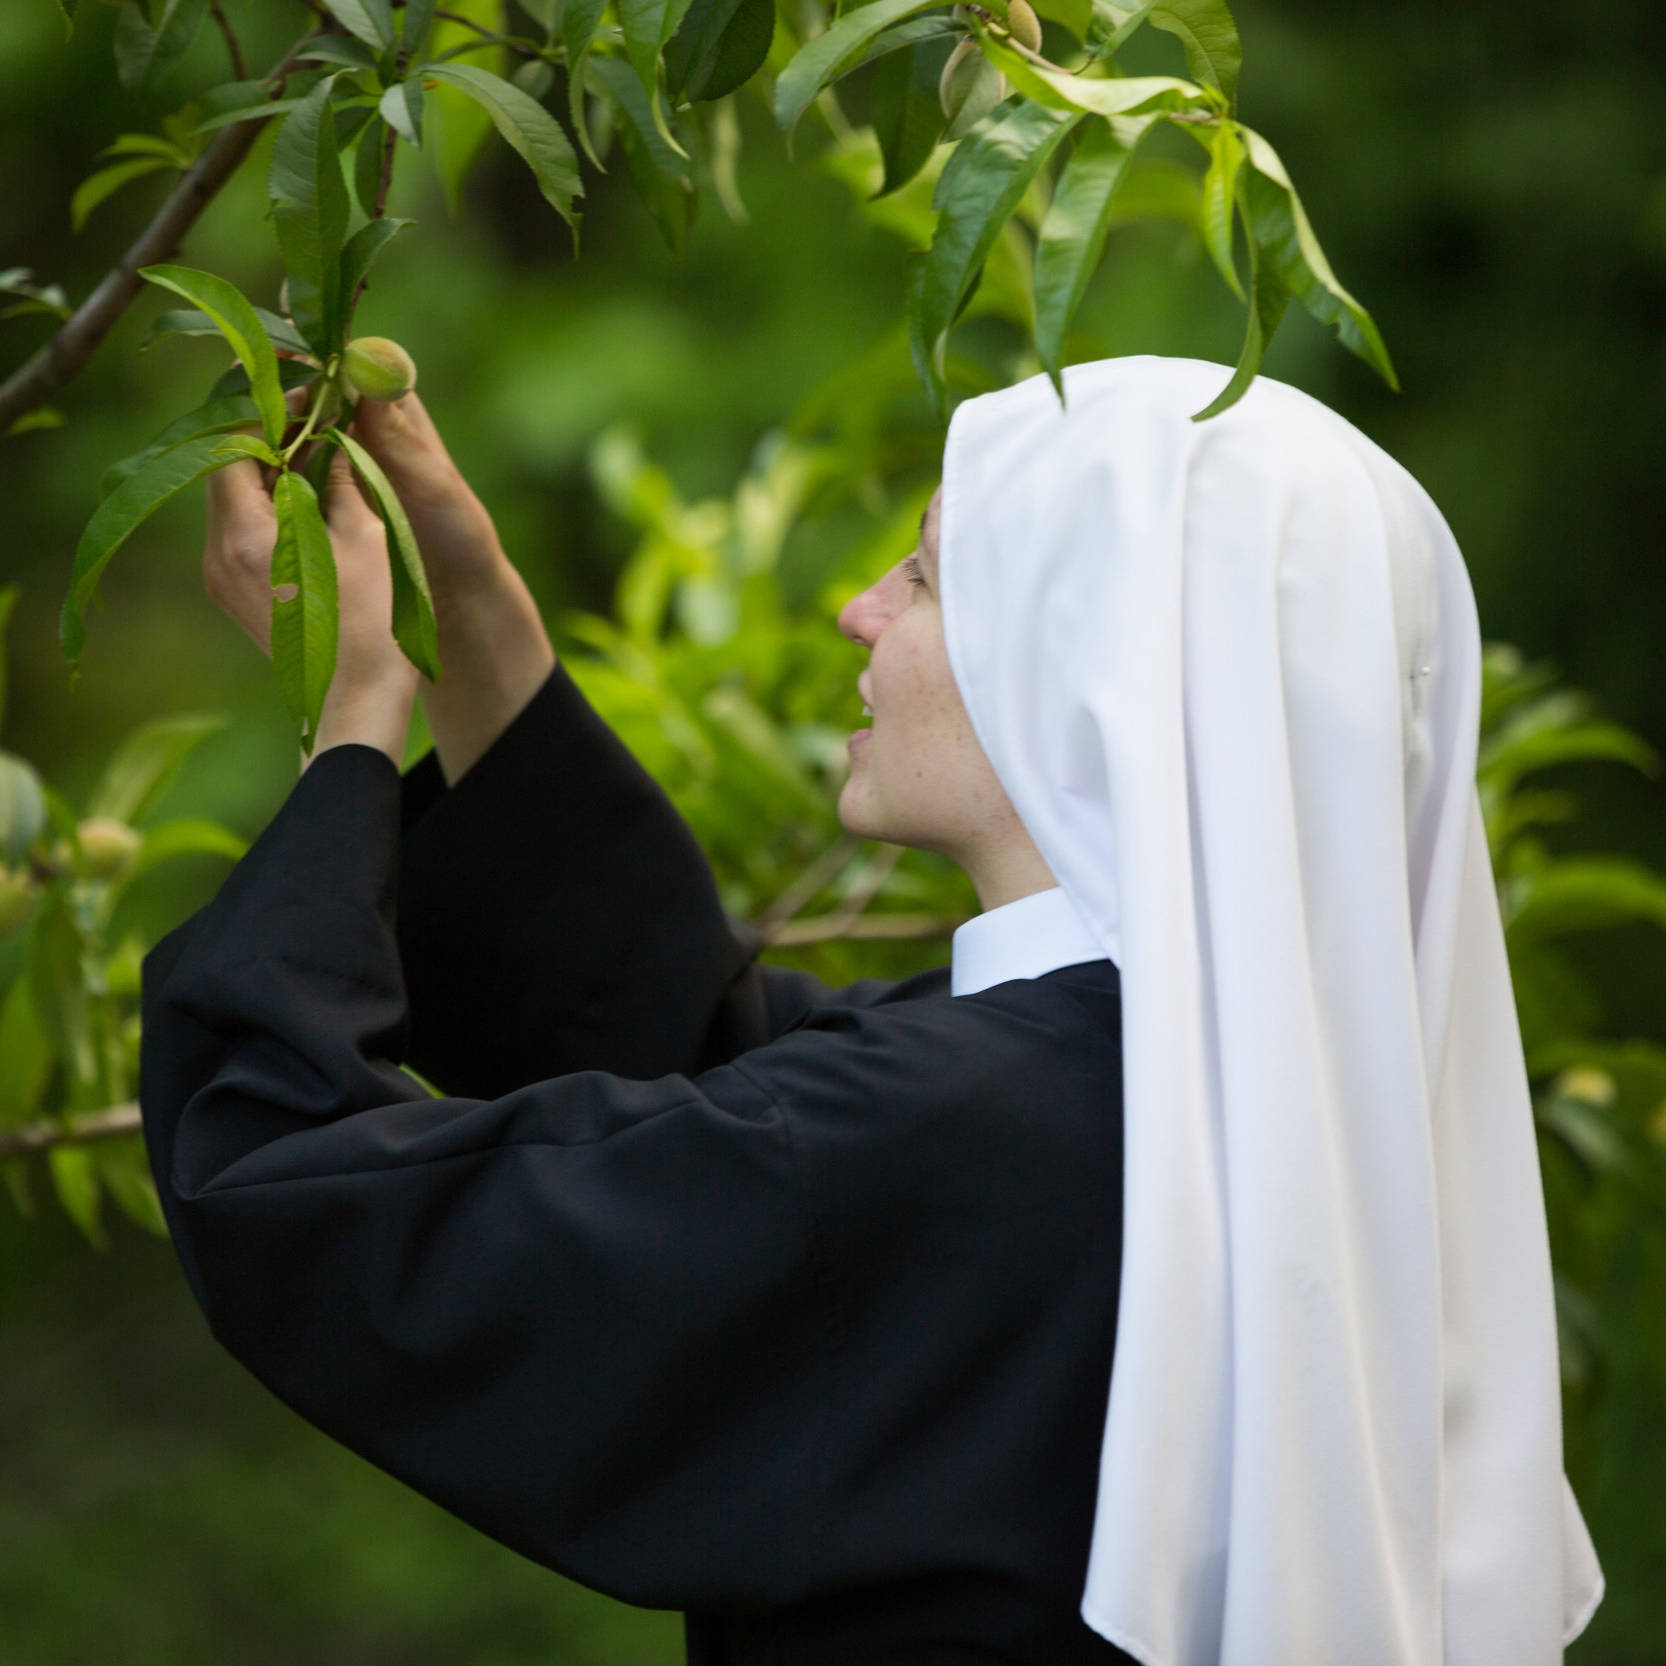 Catholic Nun Sister Wallpaper